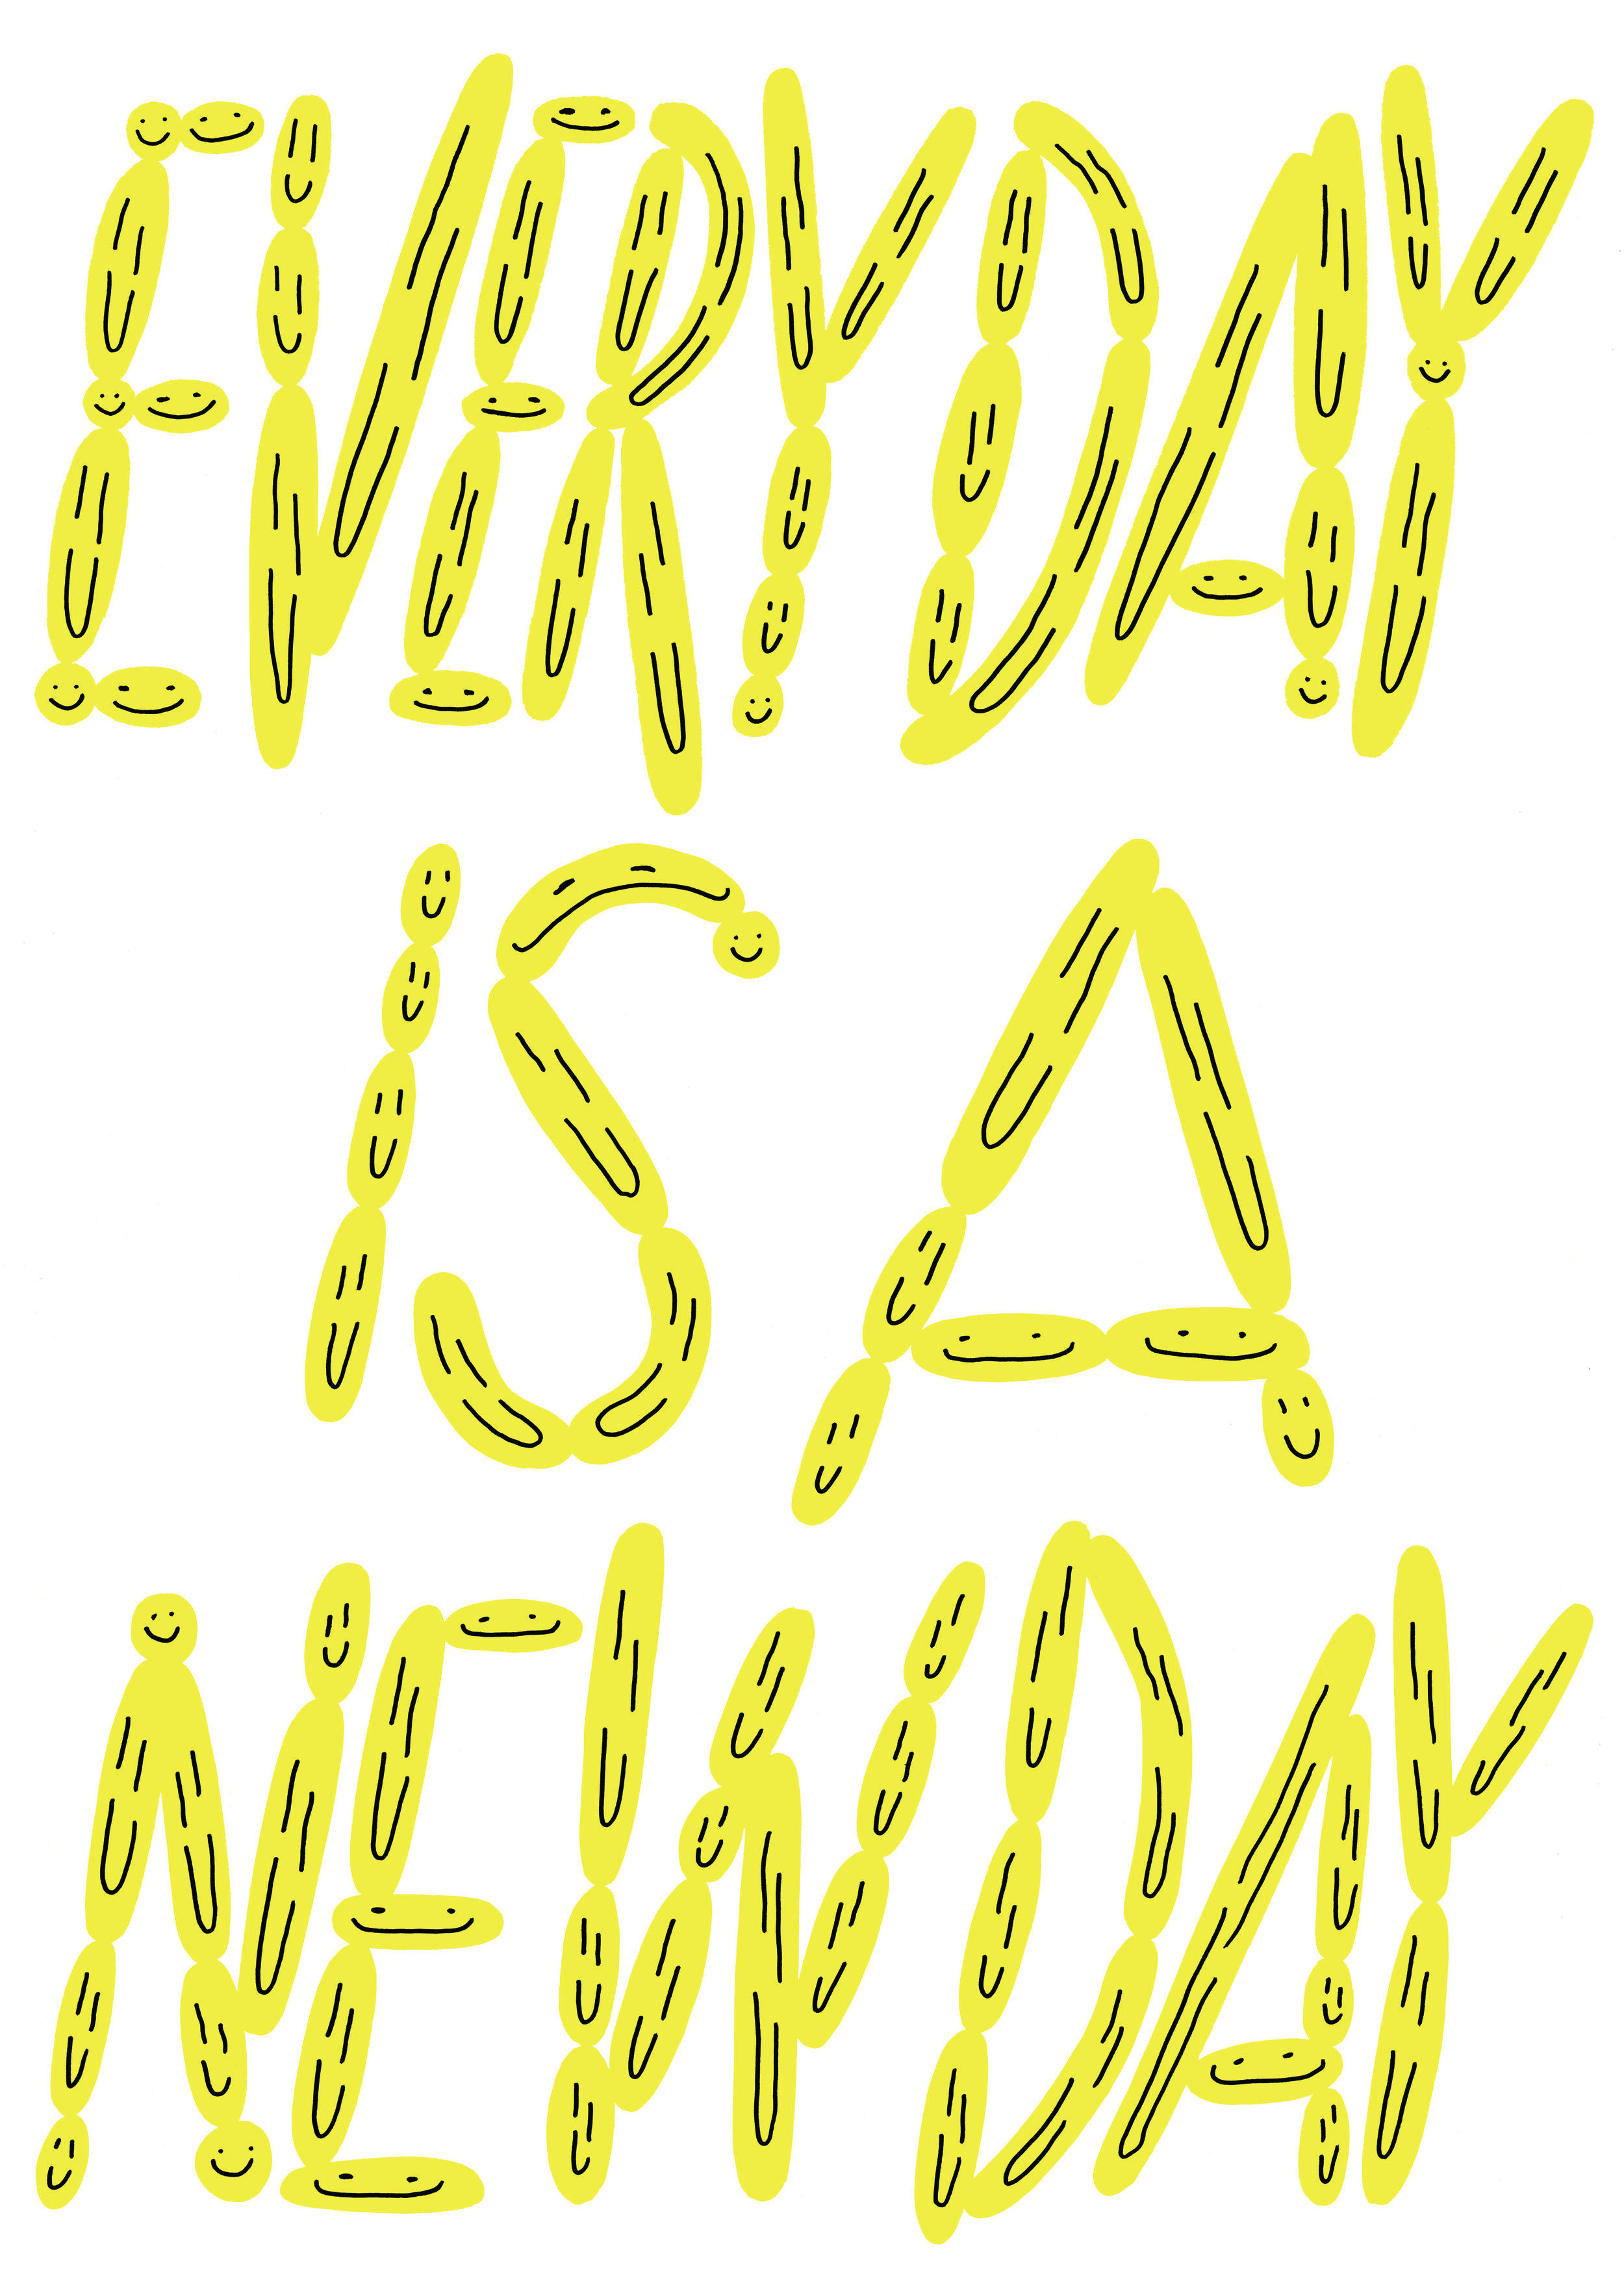 SpickSpan_Everyday-Yellow.jpg